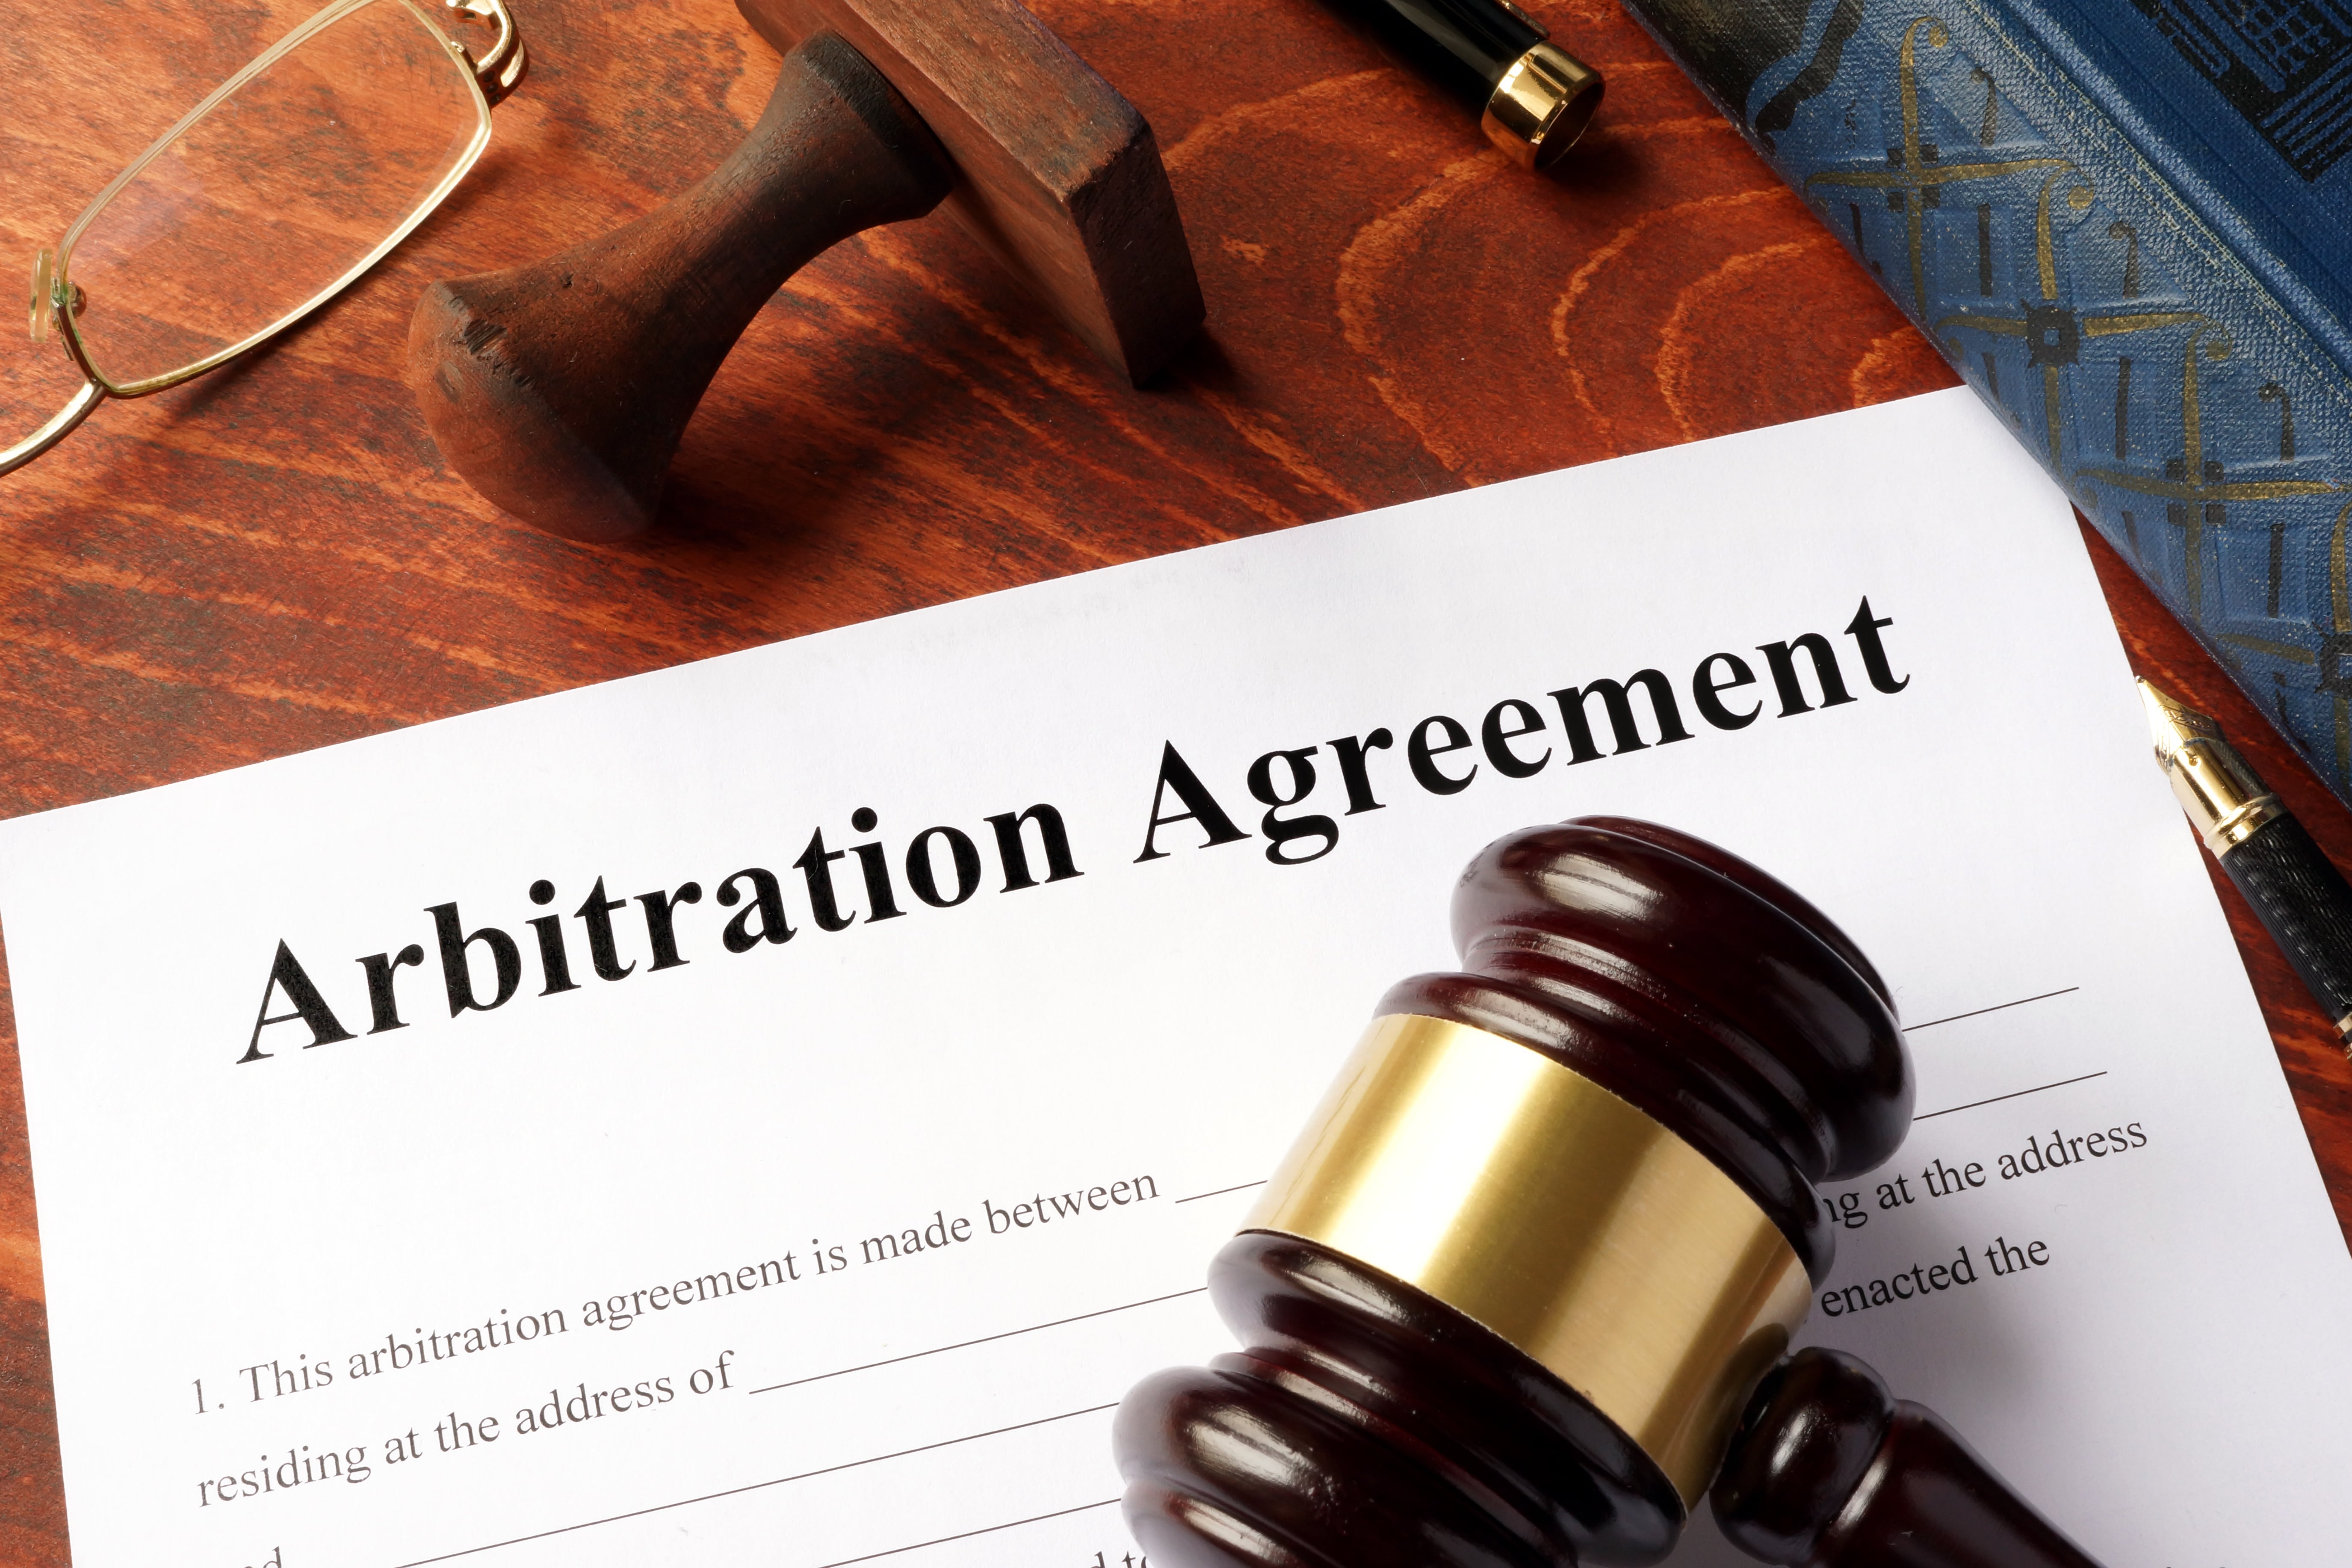 dissertation topics on arbitration